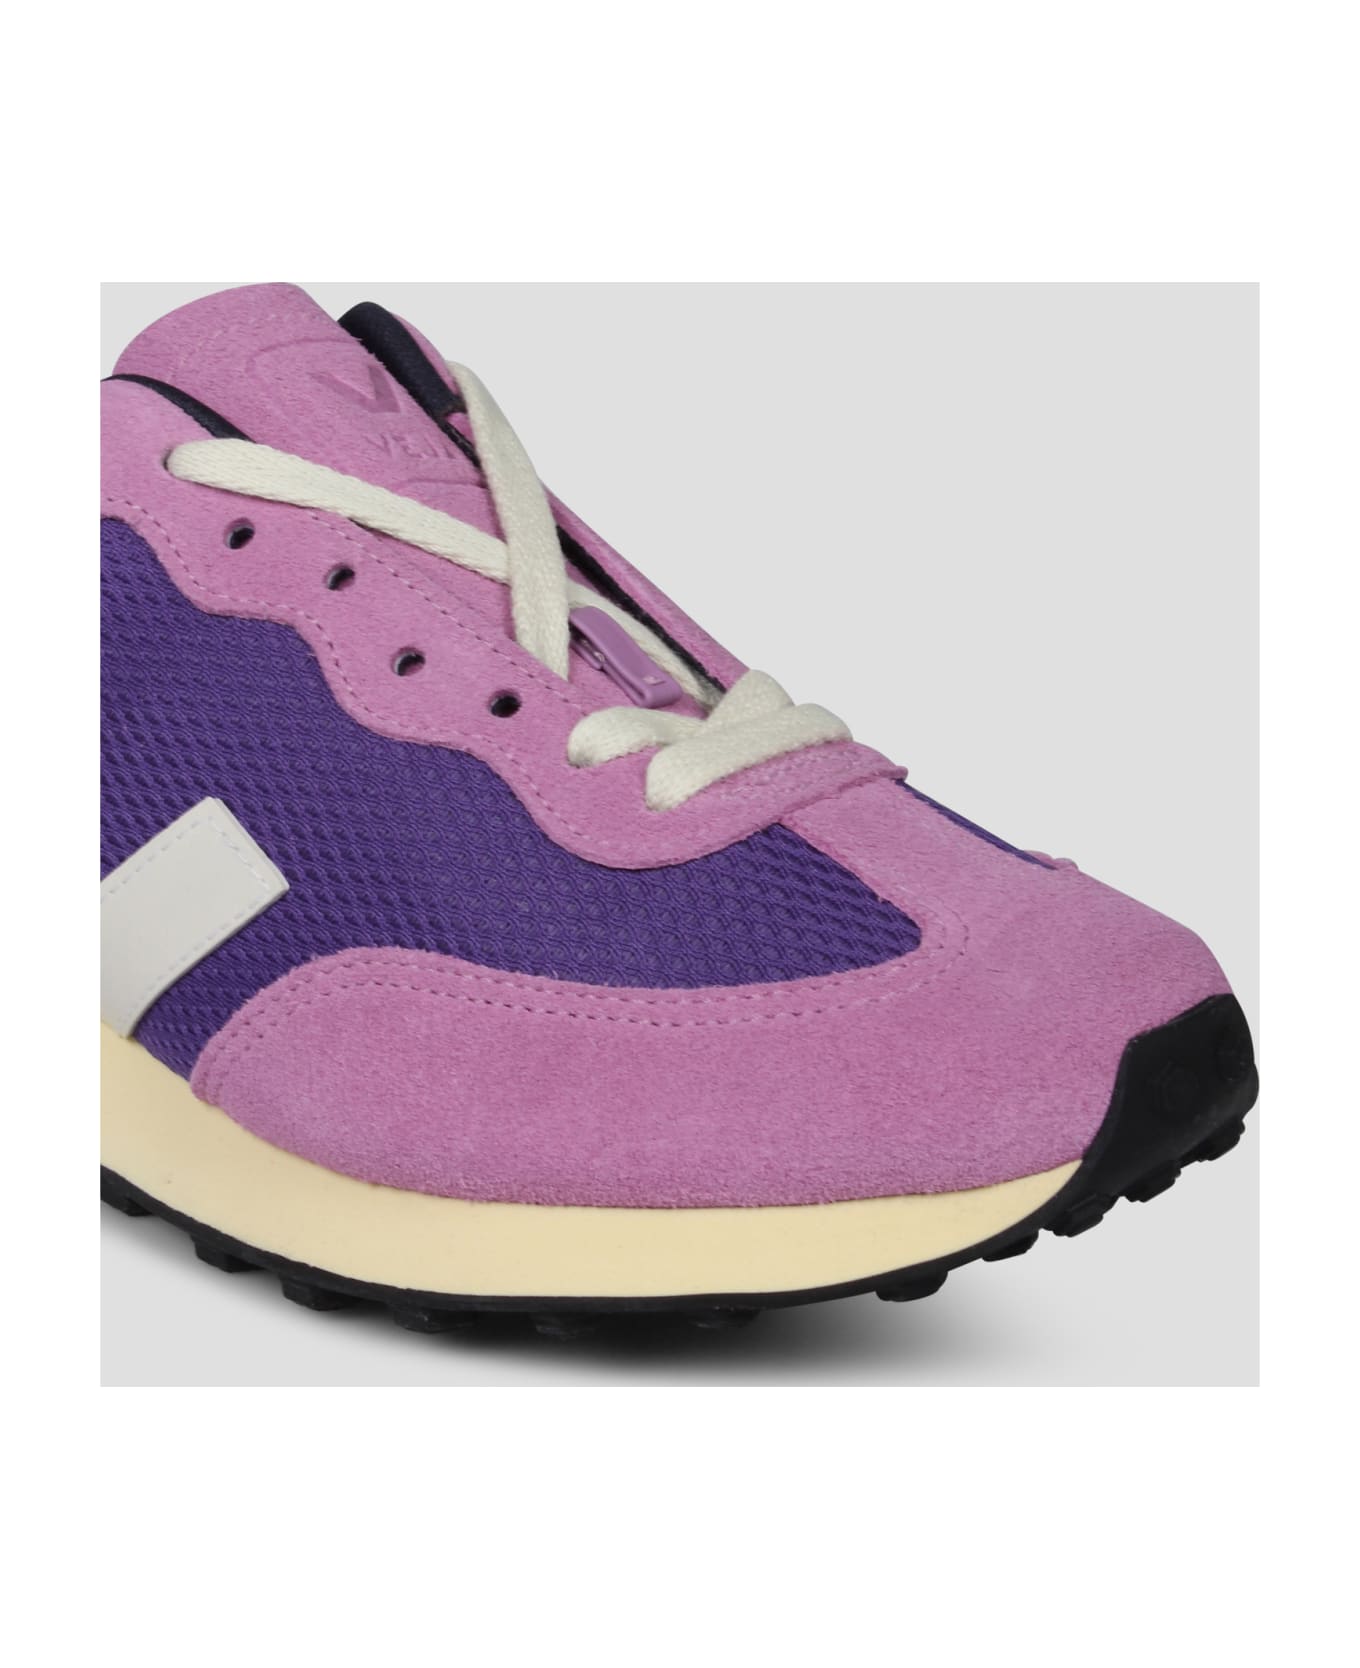 Veja Rio Branco Alveomesh Sneakers - Pink & Purple スニーカー